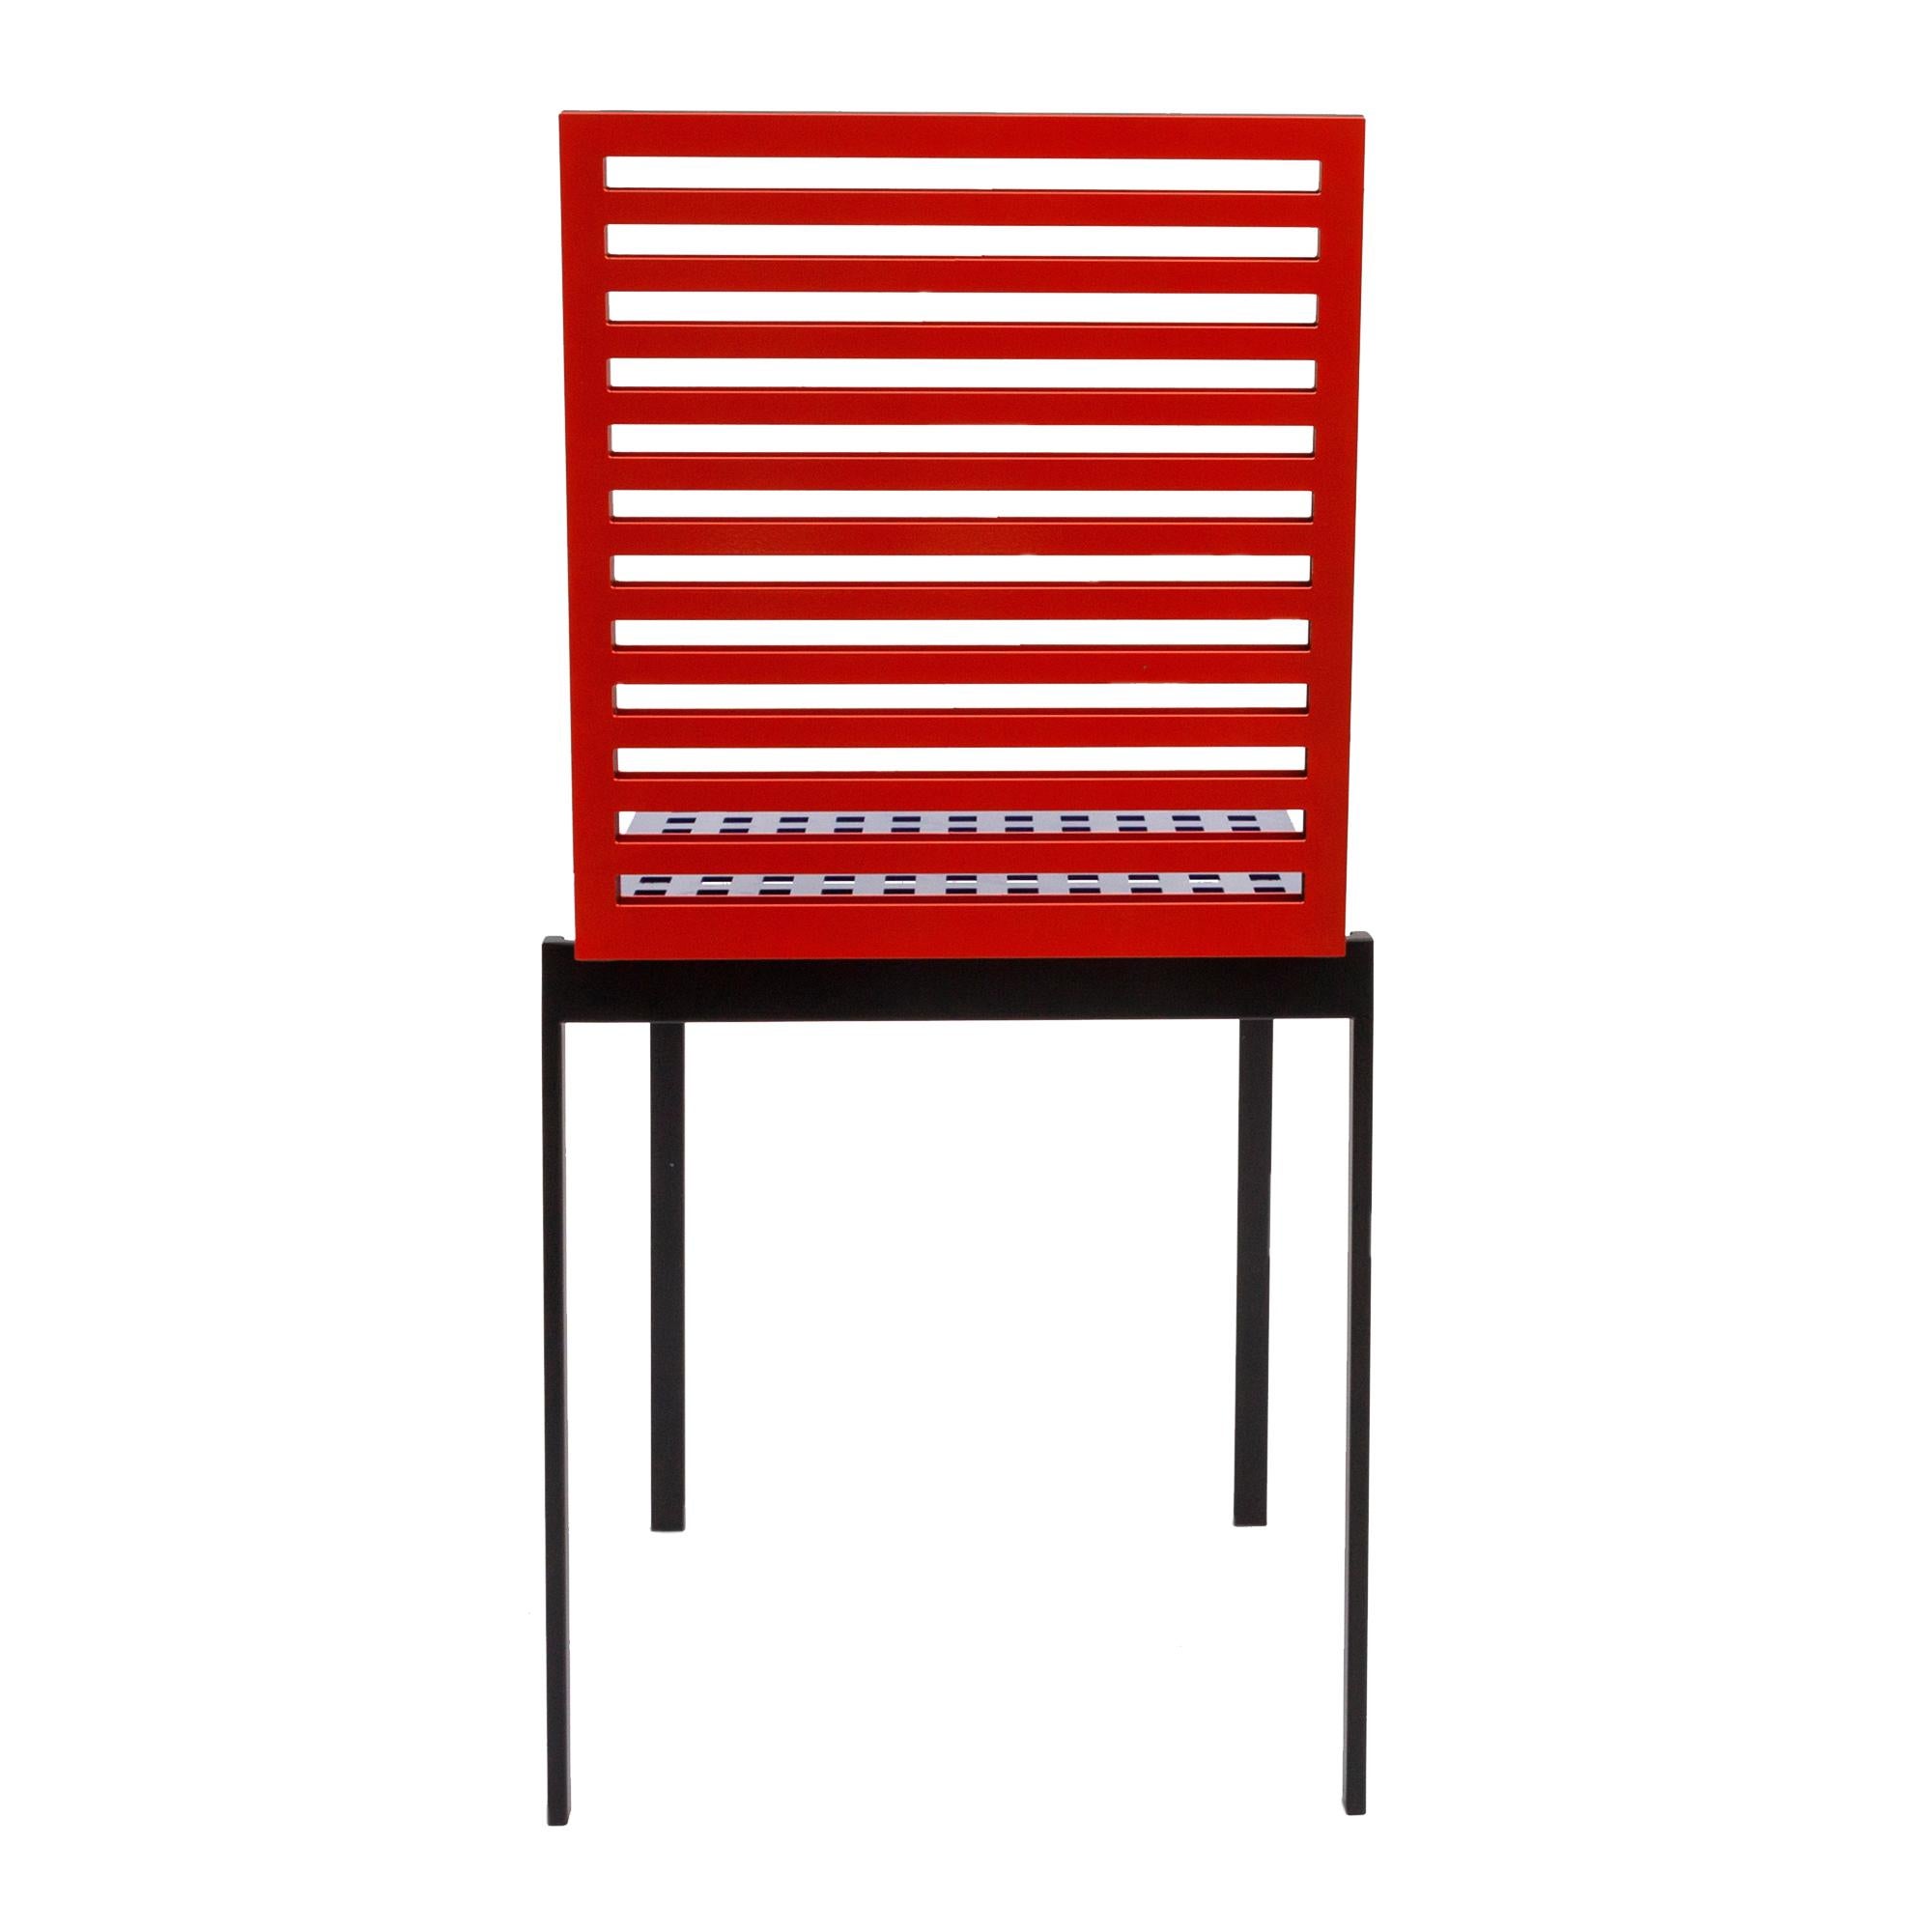 Italian Contemporary Tanit Classic Chair in Bicolored Aluminum, Manhattan Version For Sale